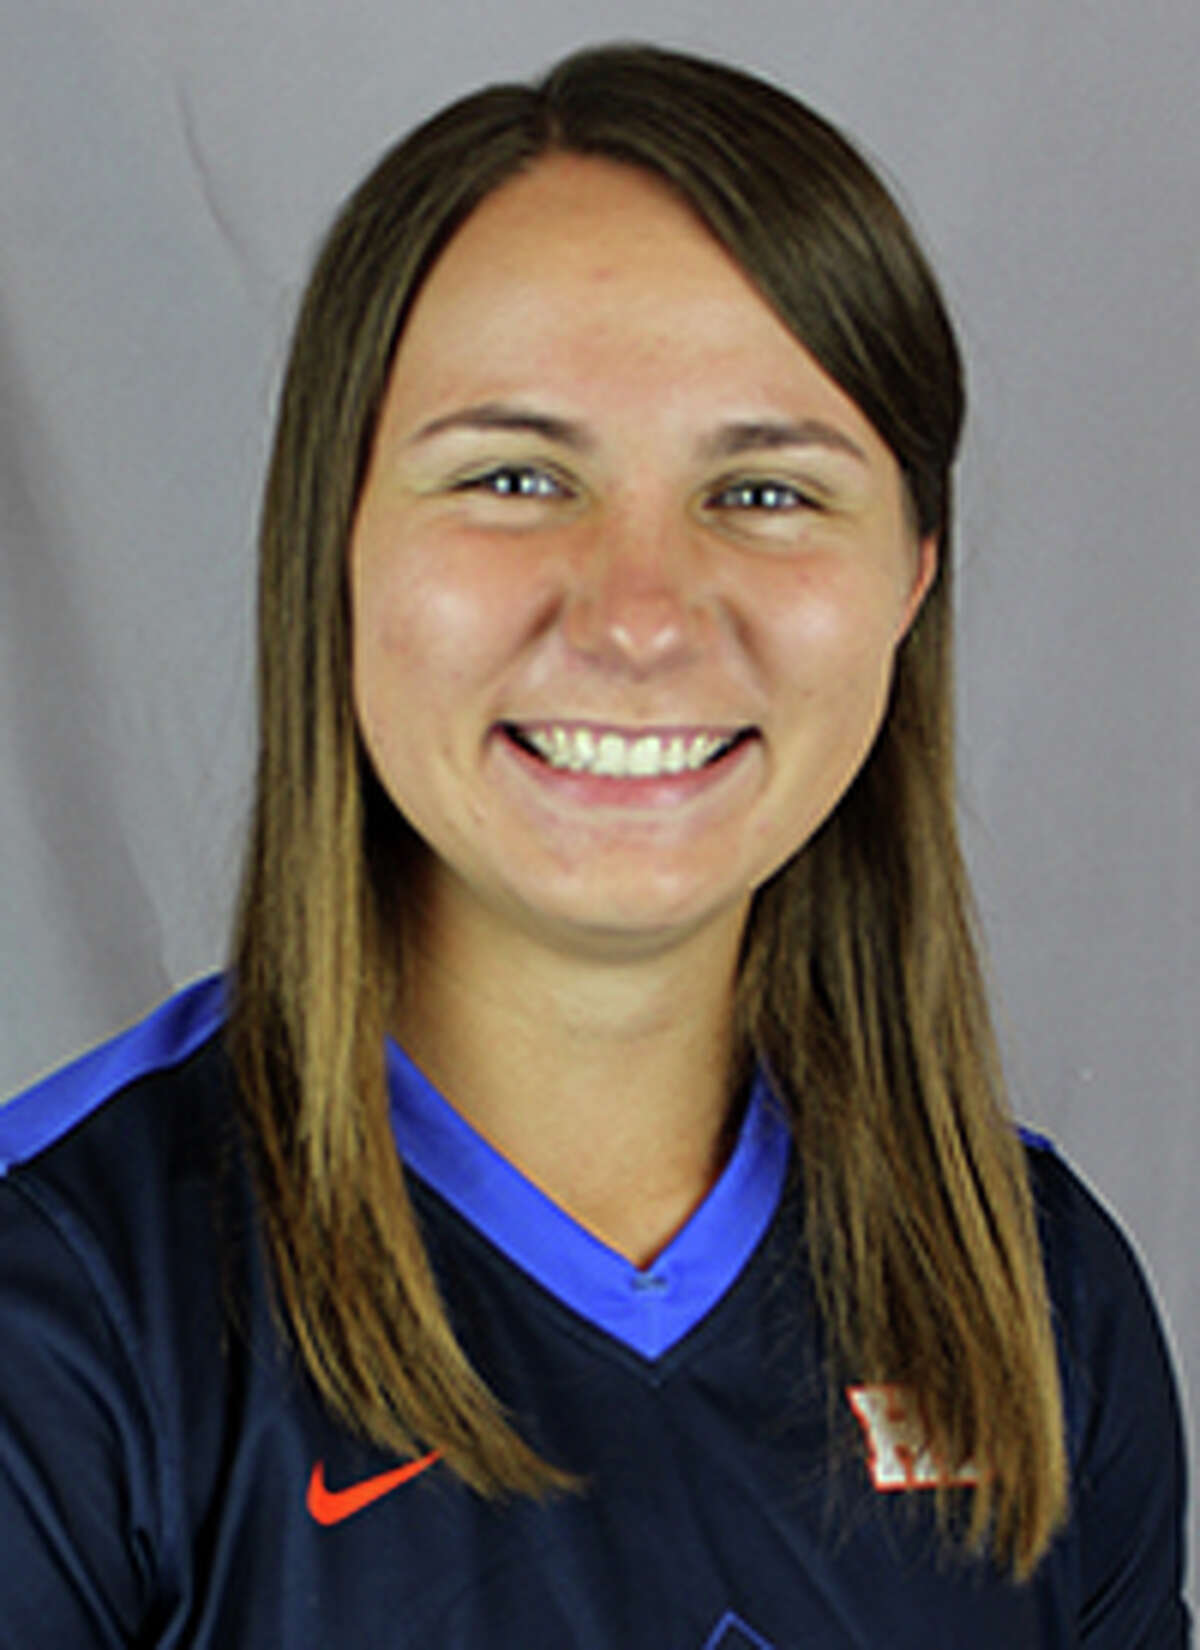 Houston Baptist women's soccer player Allison Abendschein. A 2013 Magnolia High School graduate.